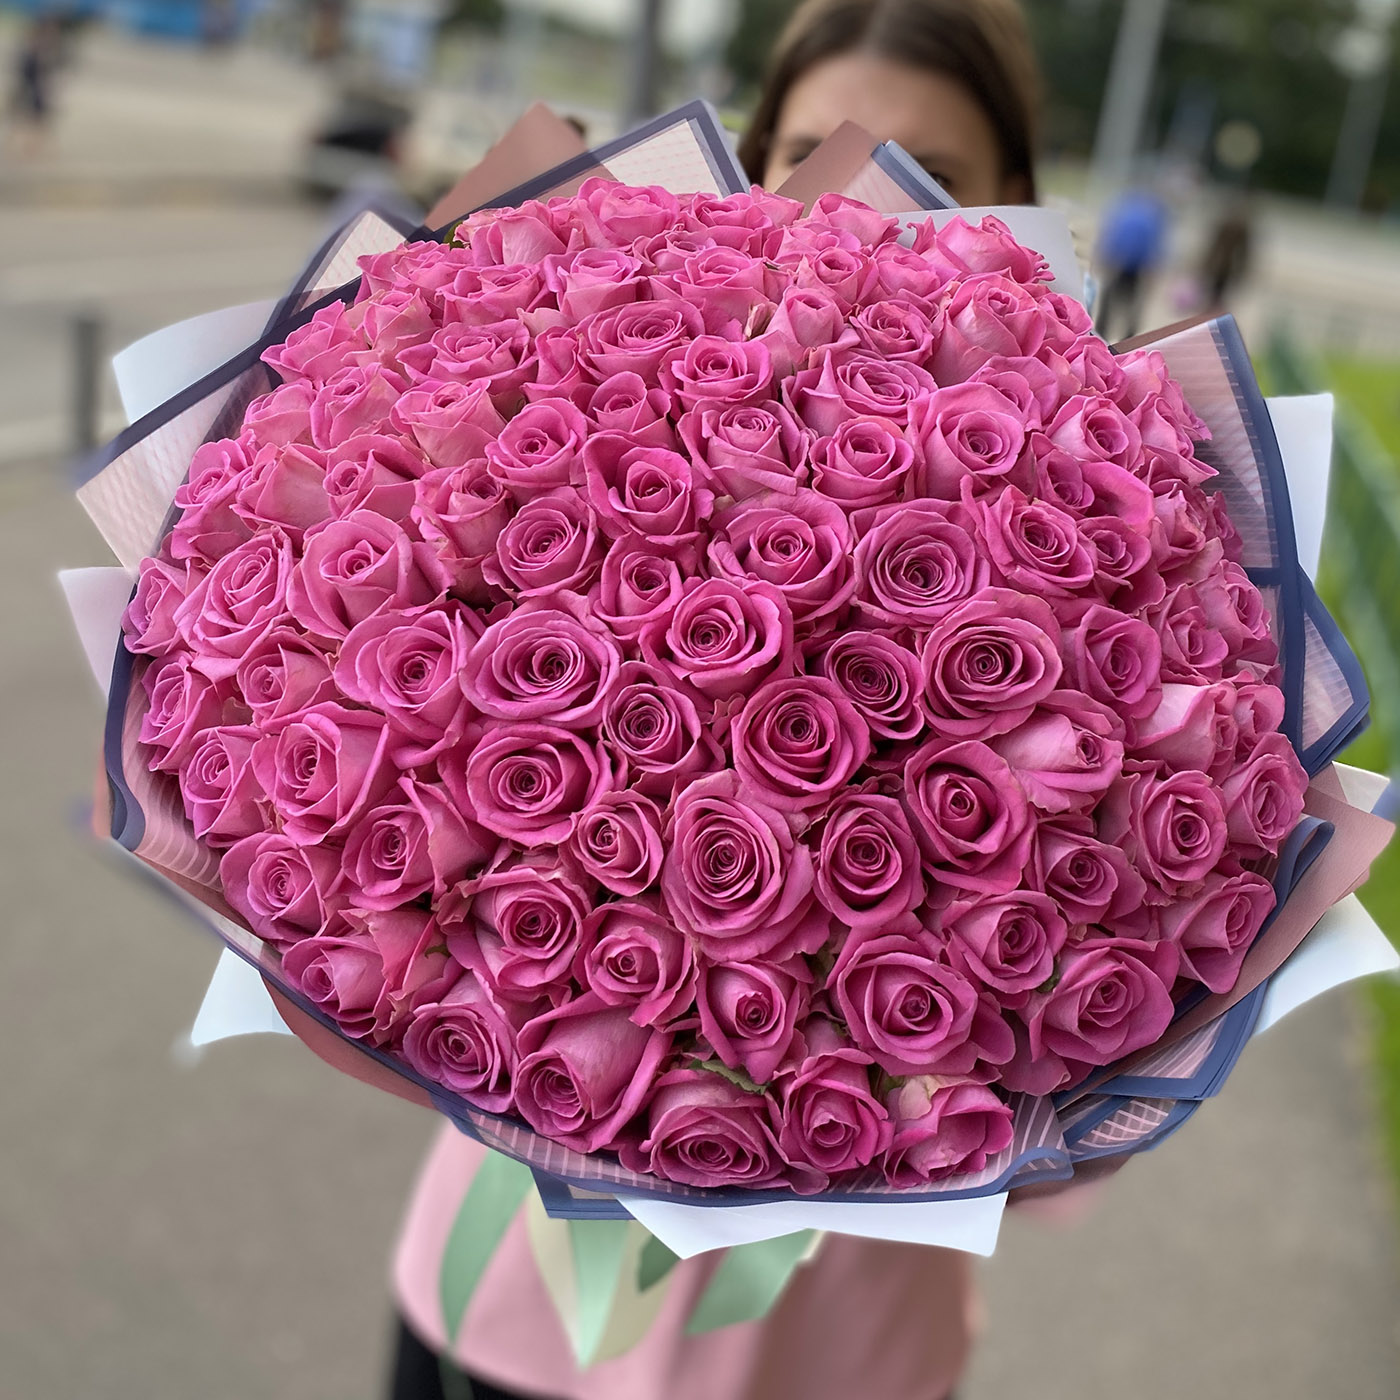 Цветы 101 роза дешево в москве торт на заказ инстаграм москва